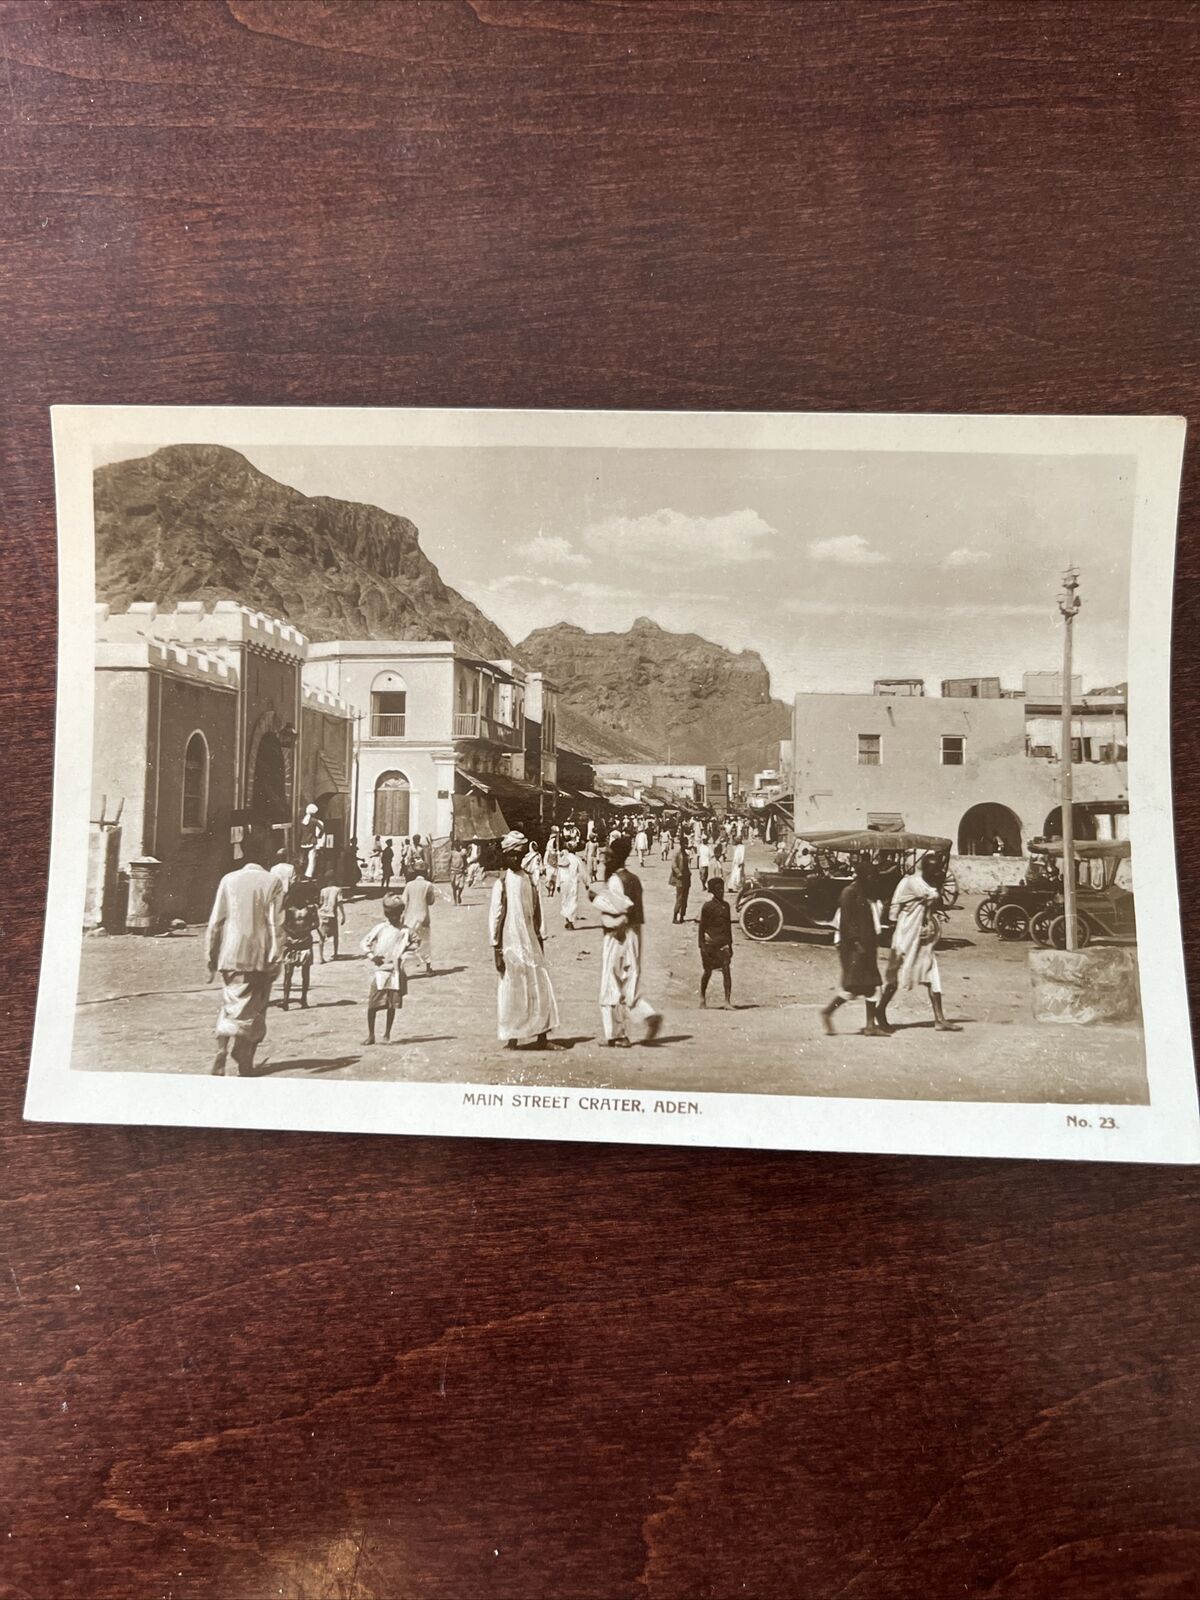 Vintage Postcard, Main Street Crater, Aden, Egyptian Cigarettes Factory